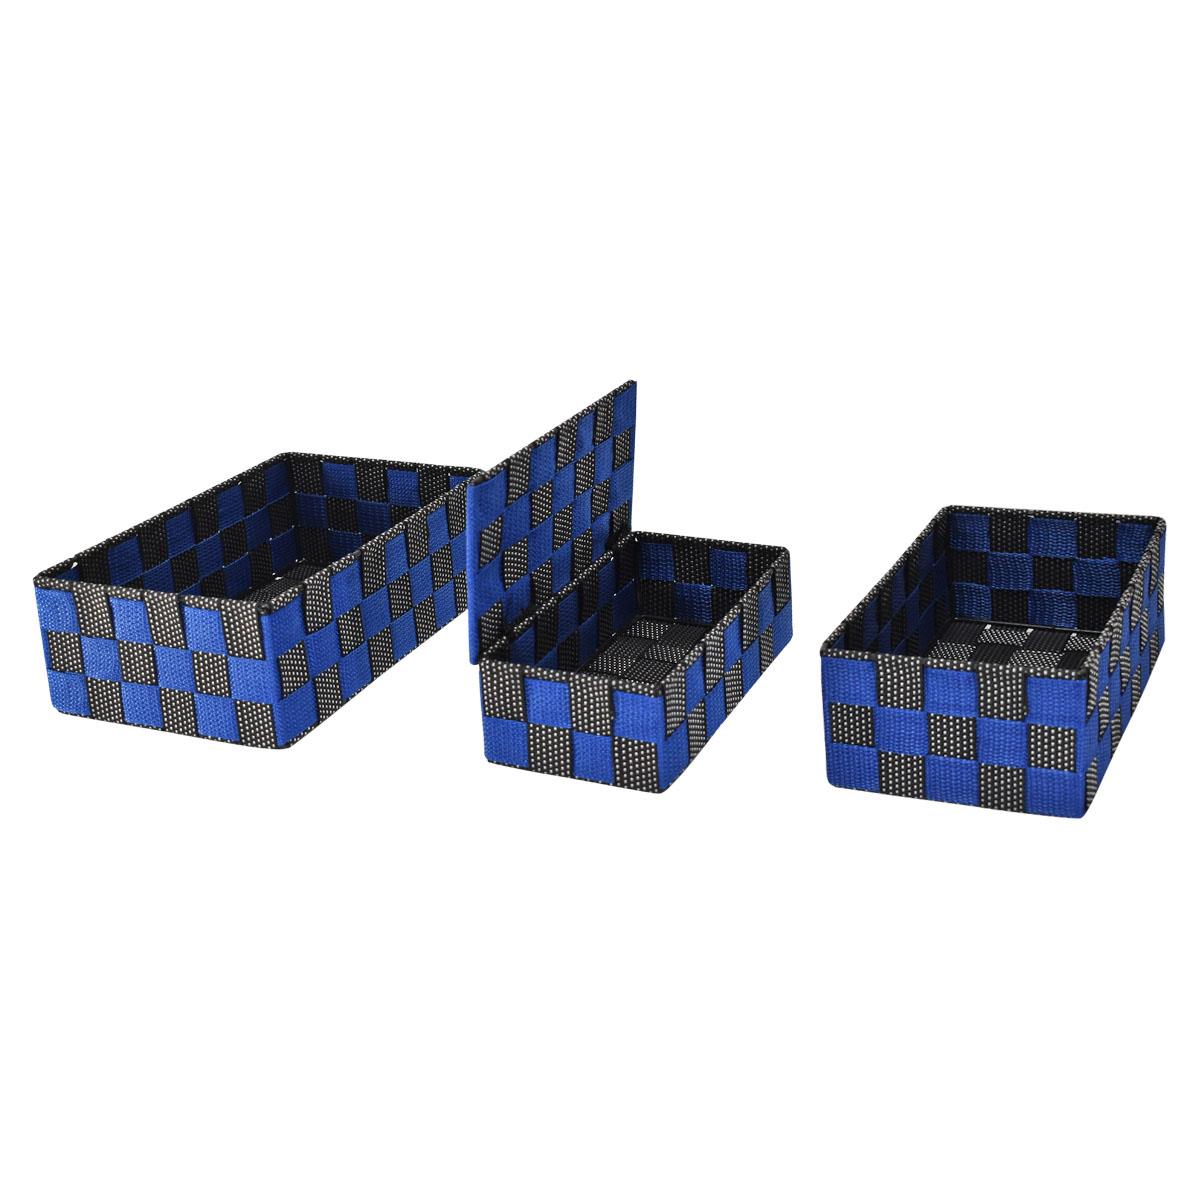 Woven Storage Organizer Nylon Basket Set of 3 Tote Bins (32-4935)